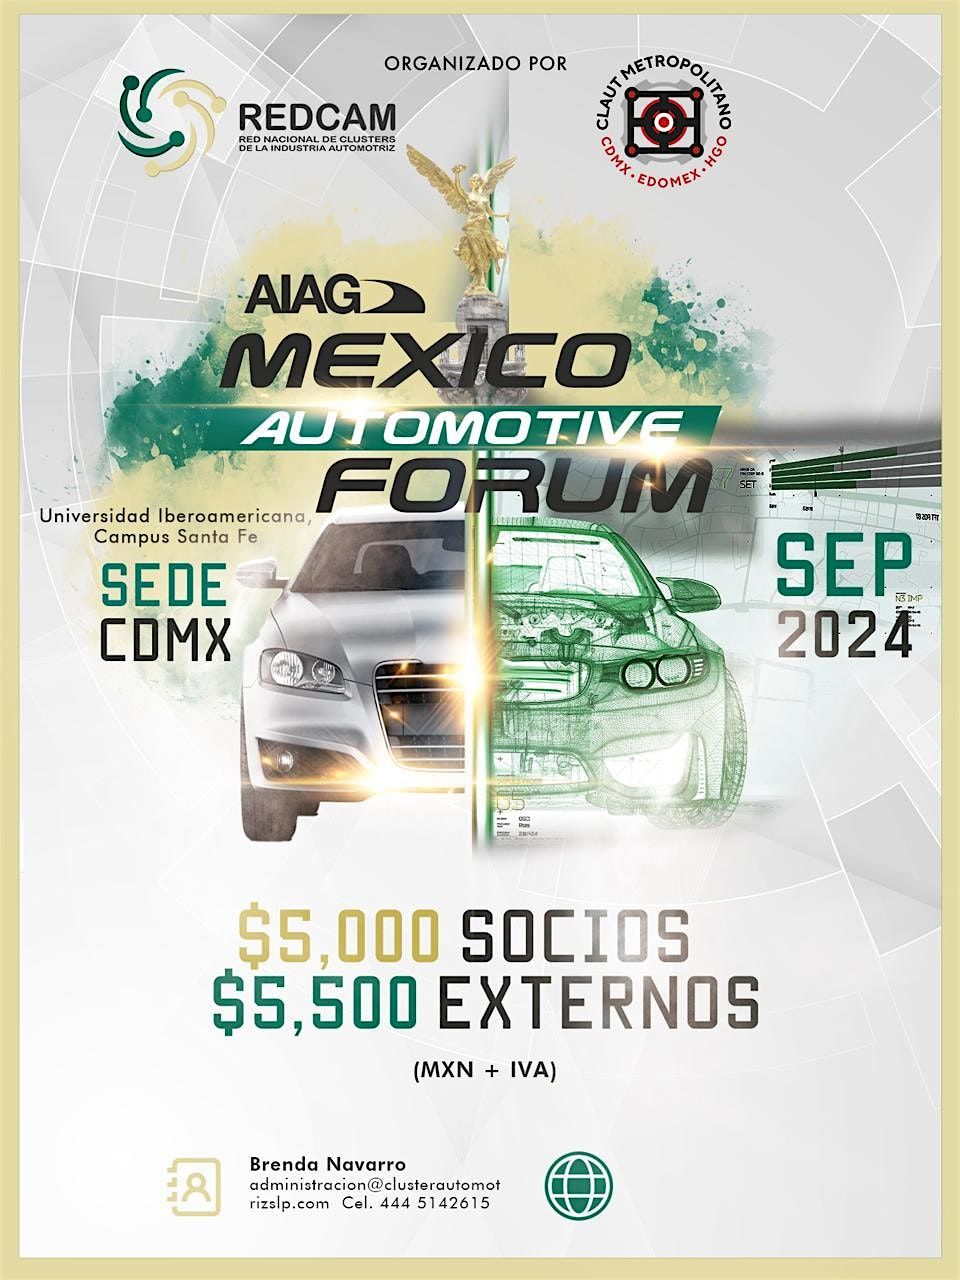 AIAG Automotive Forum 2024